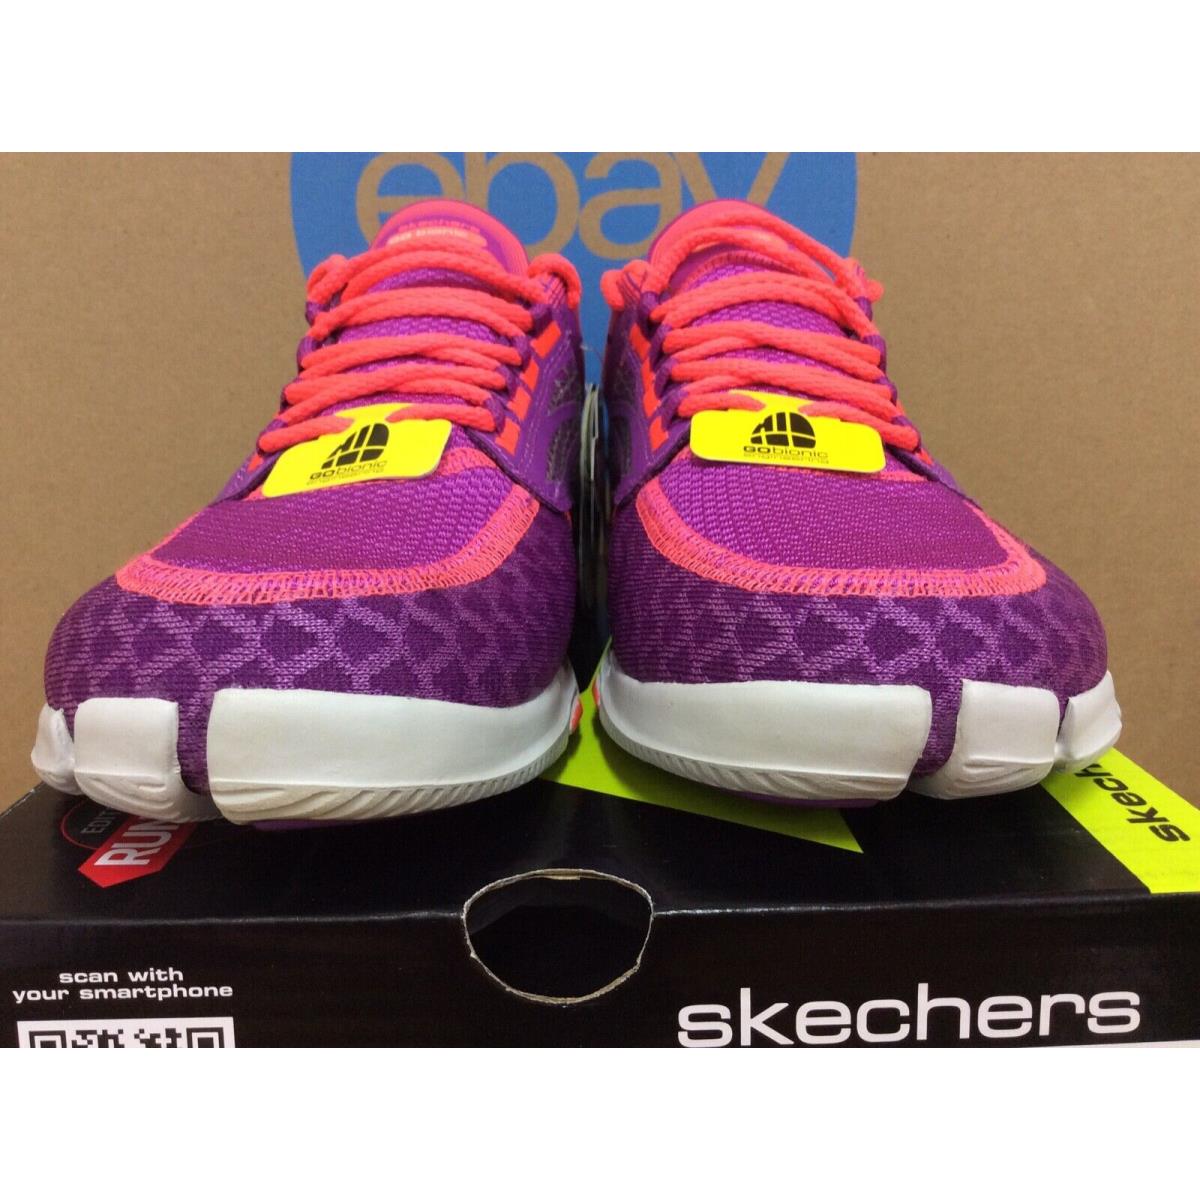 Skechers shoes Bionic Prana - Purple Hot Pink 1